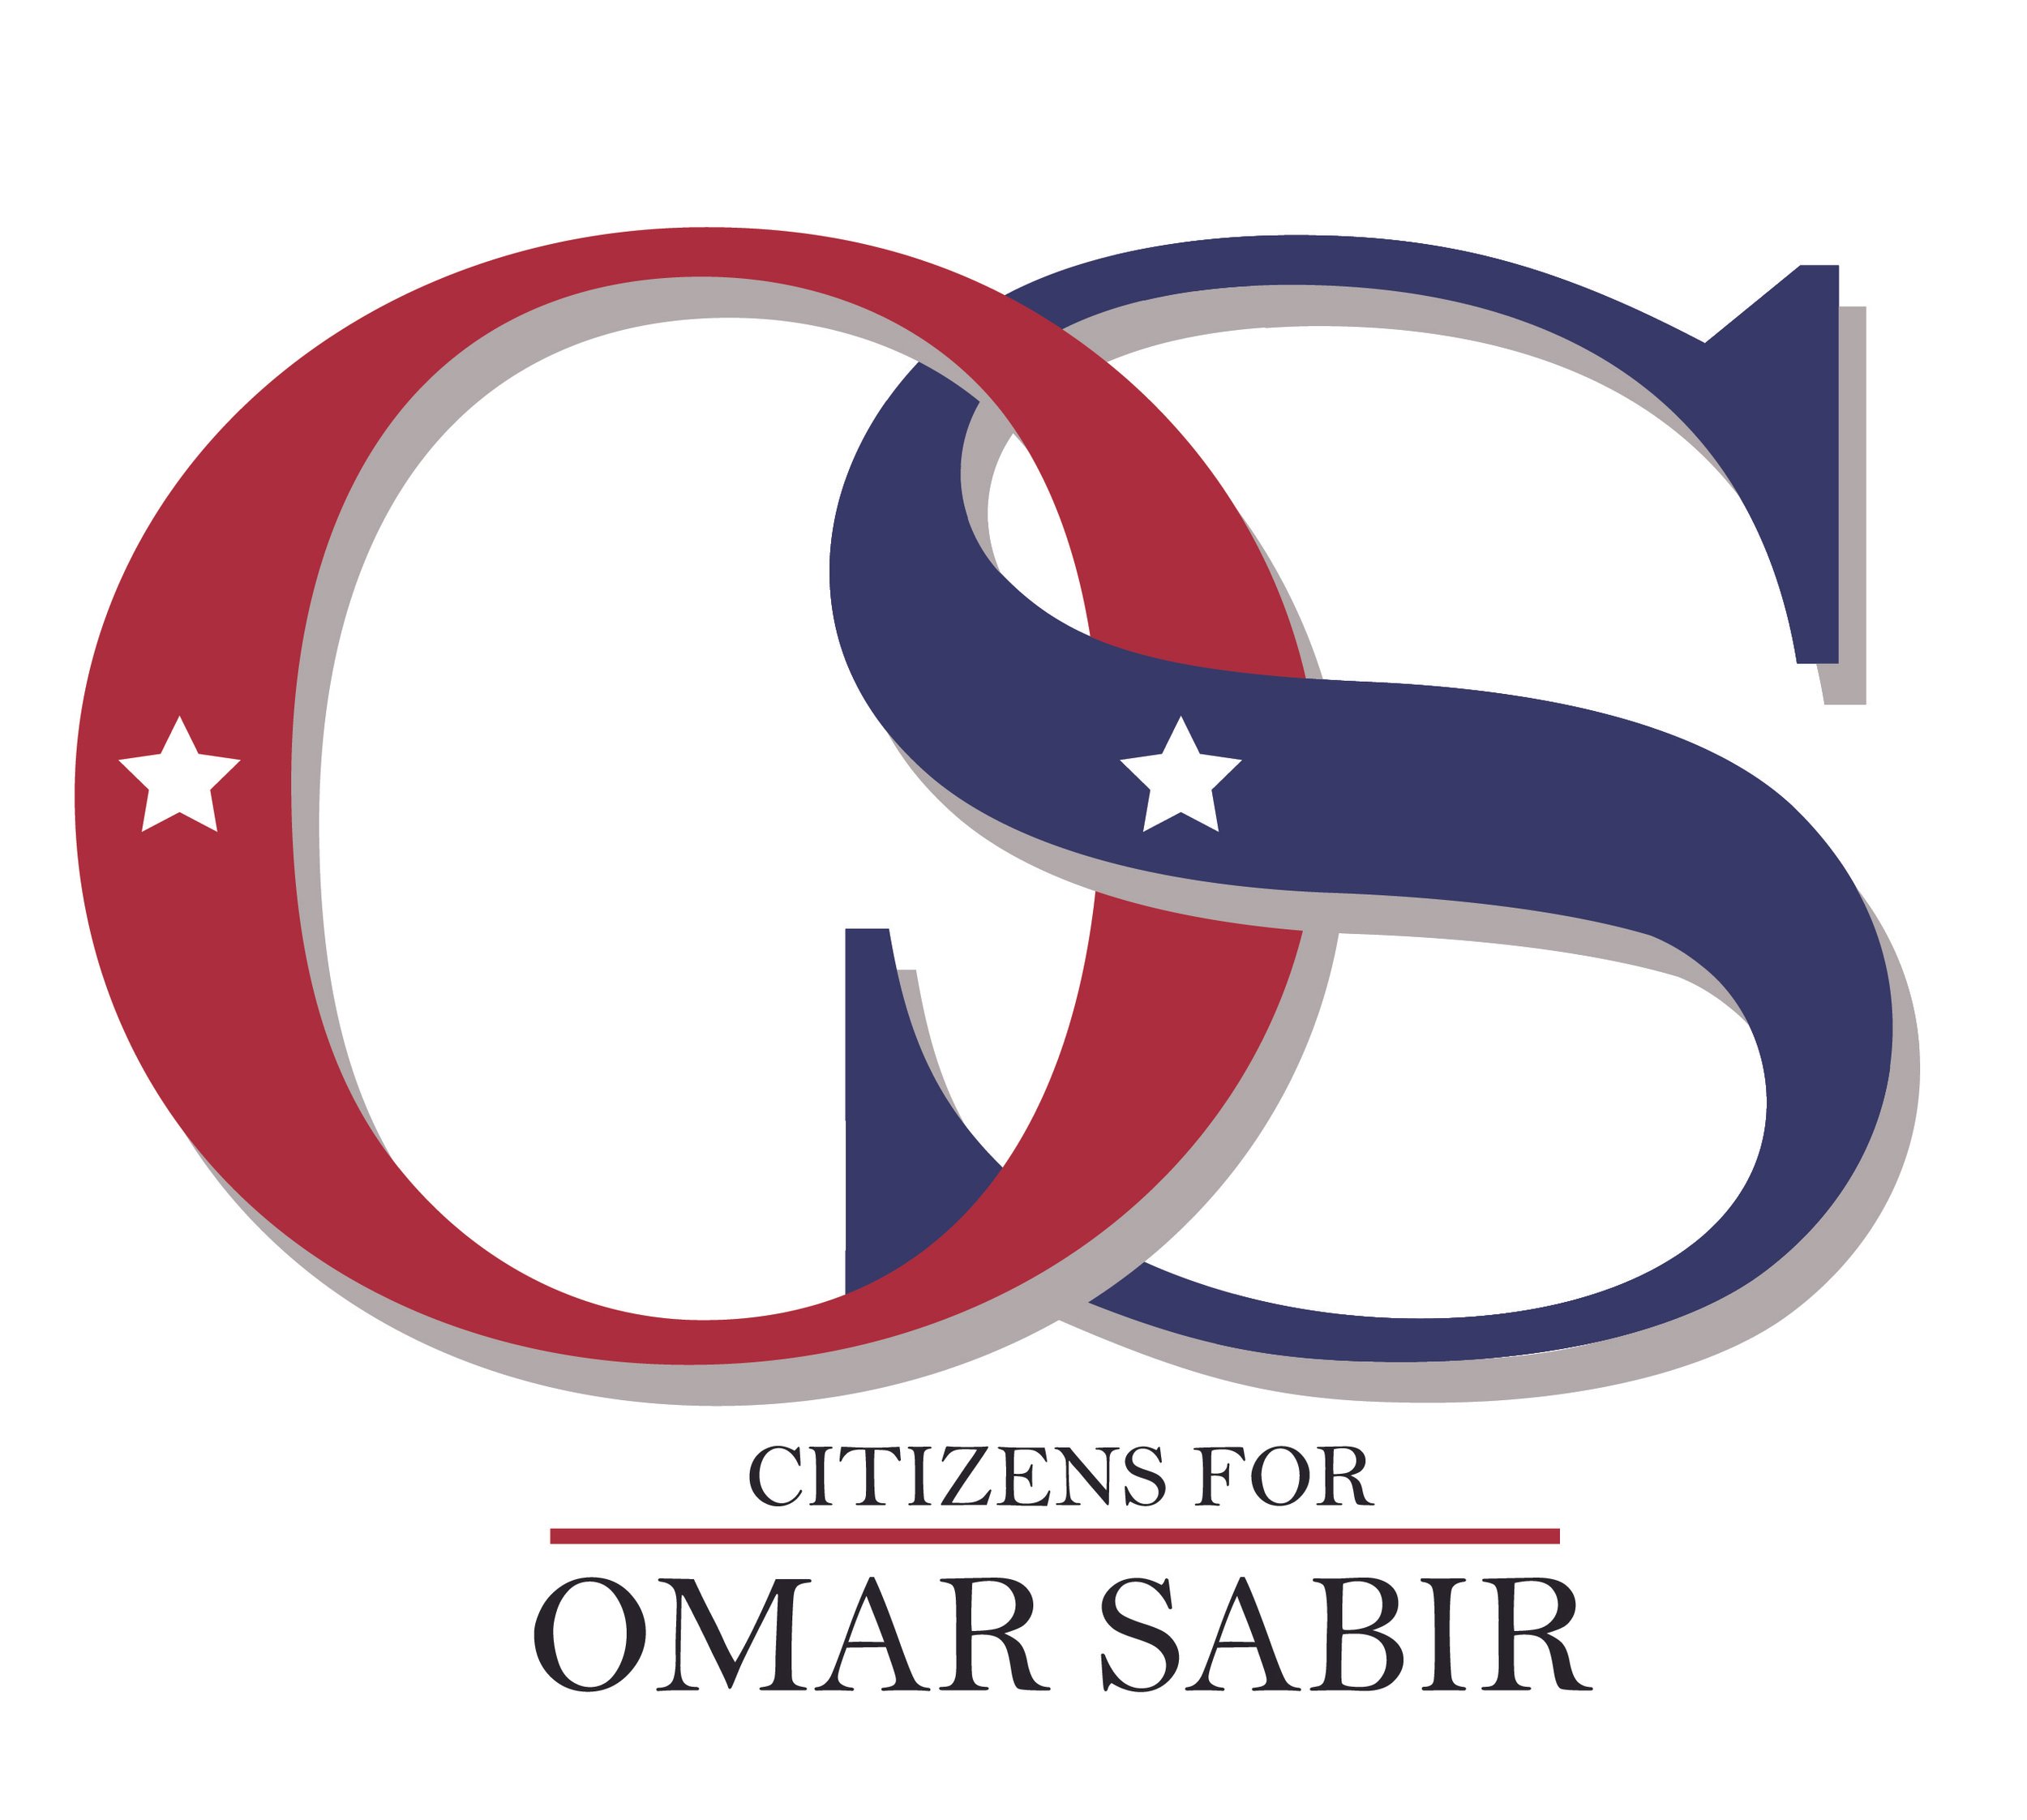 OmarSabir_logo2_masterfile.jpg